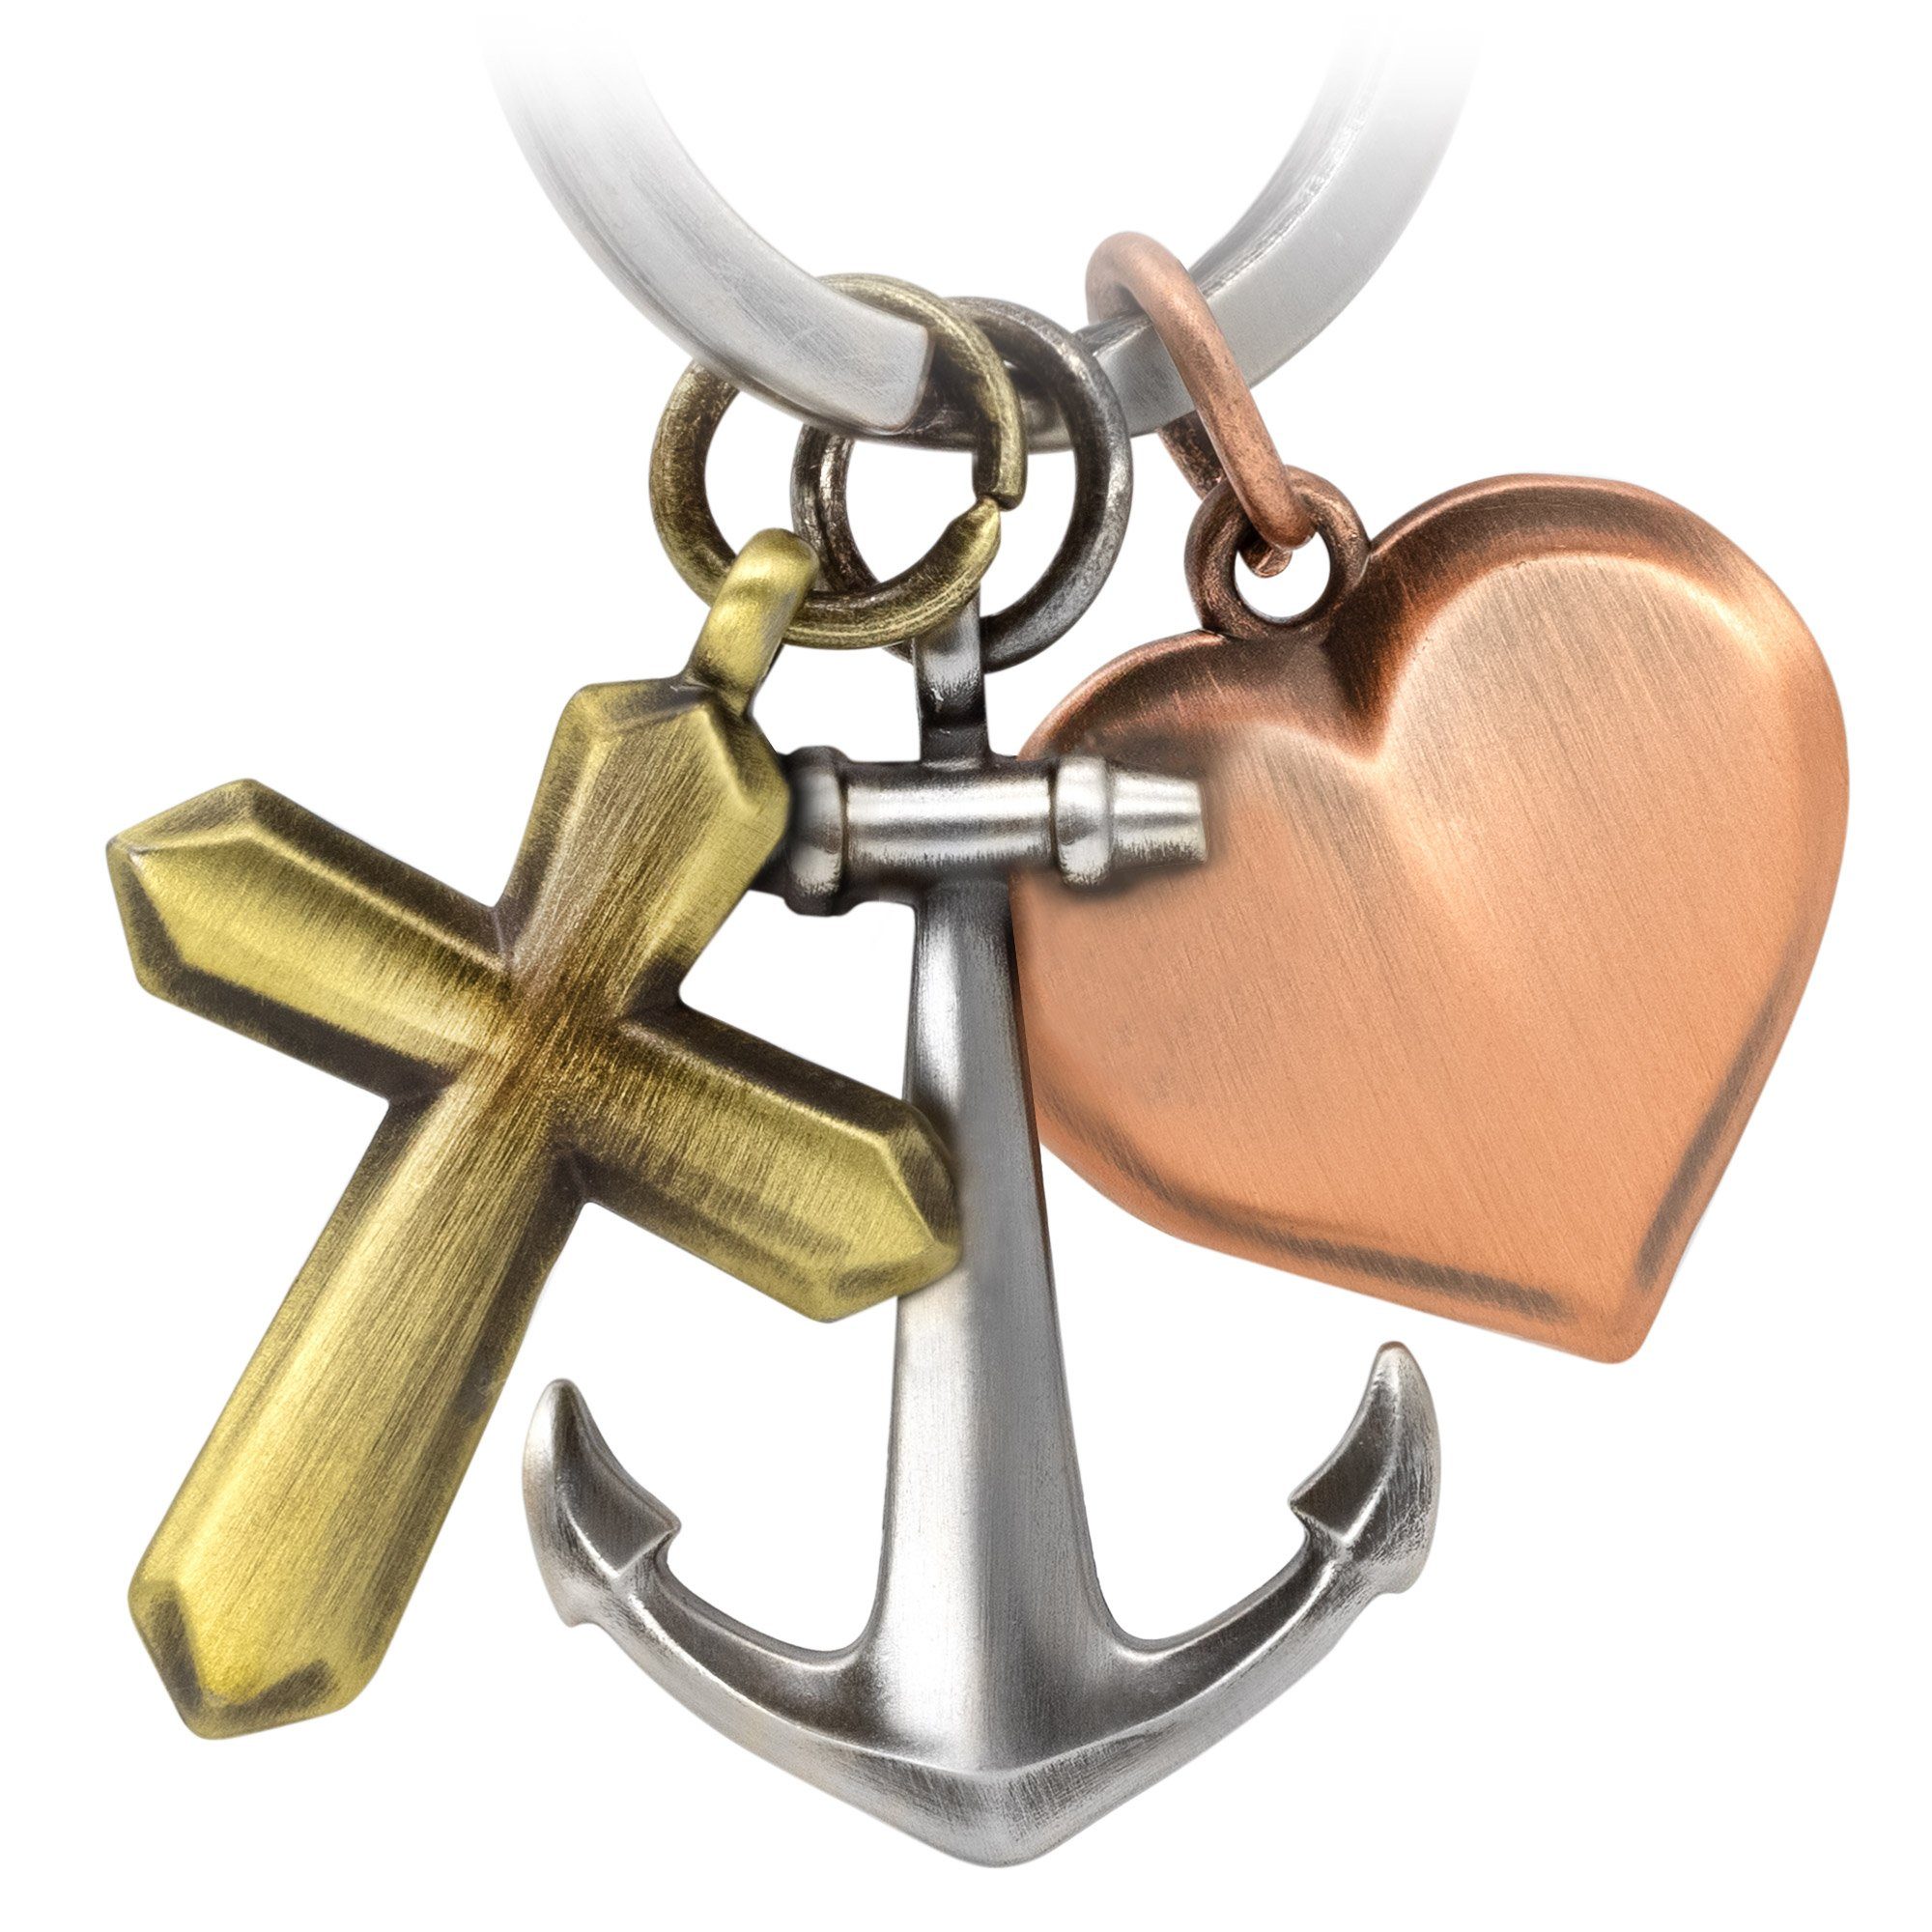 FABACH Schlüsselanhänger Glaube Liebe Geschenk Anker Kreuz Schlüsselanhänger - Hoffnung Herz